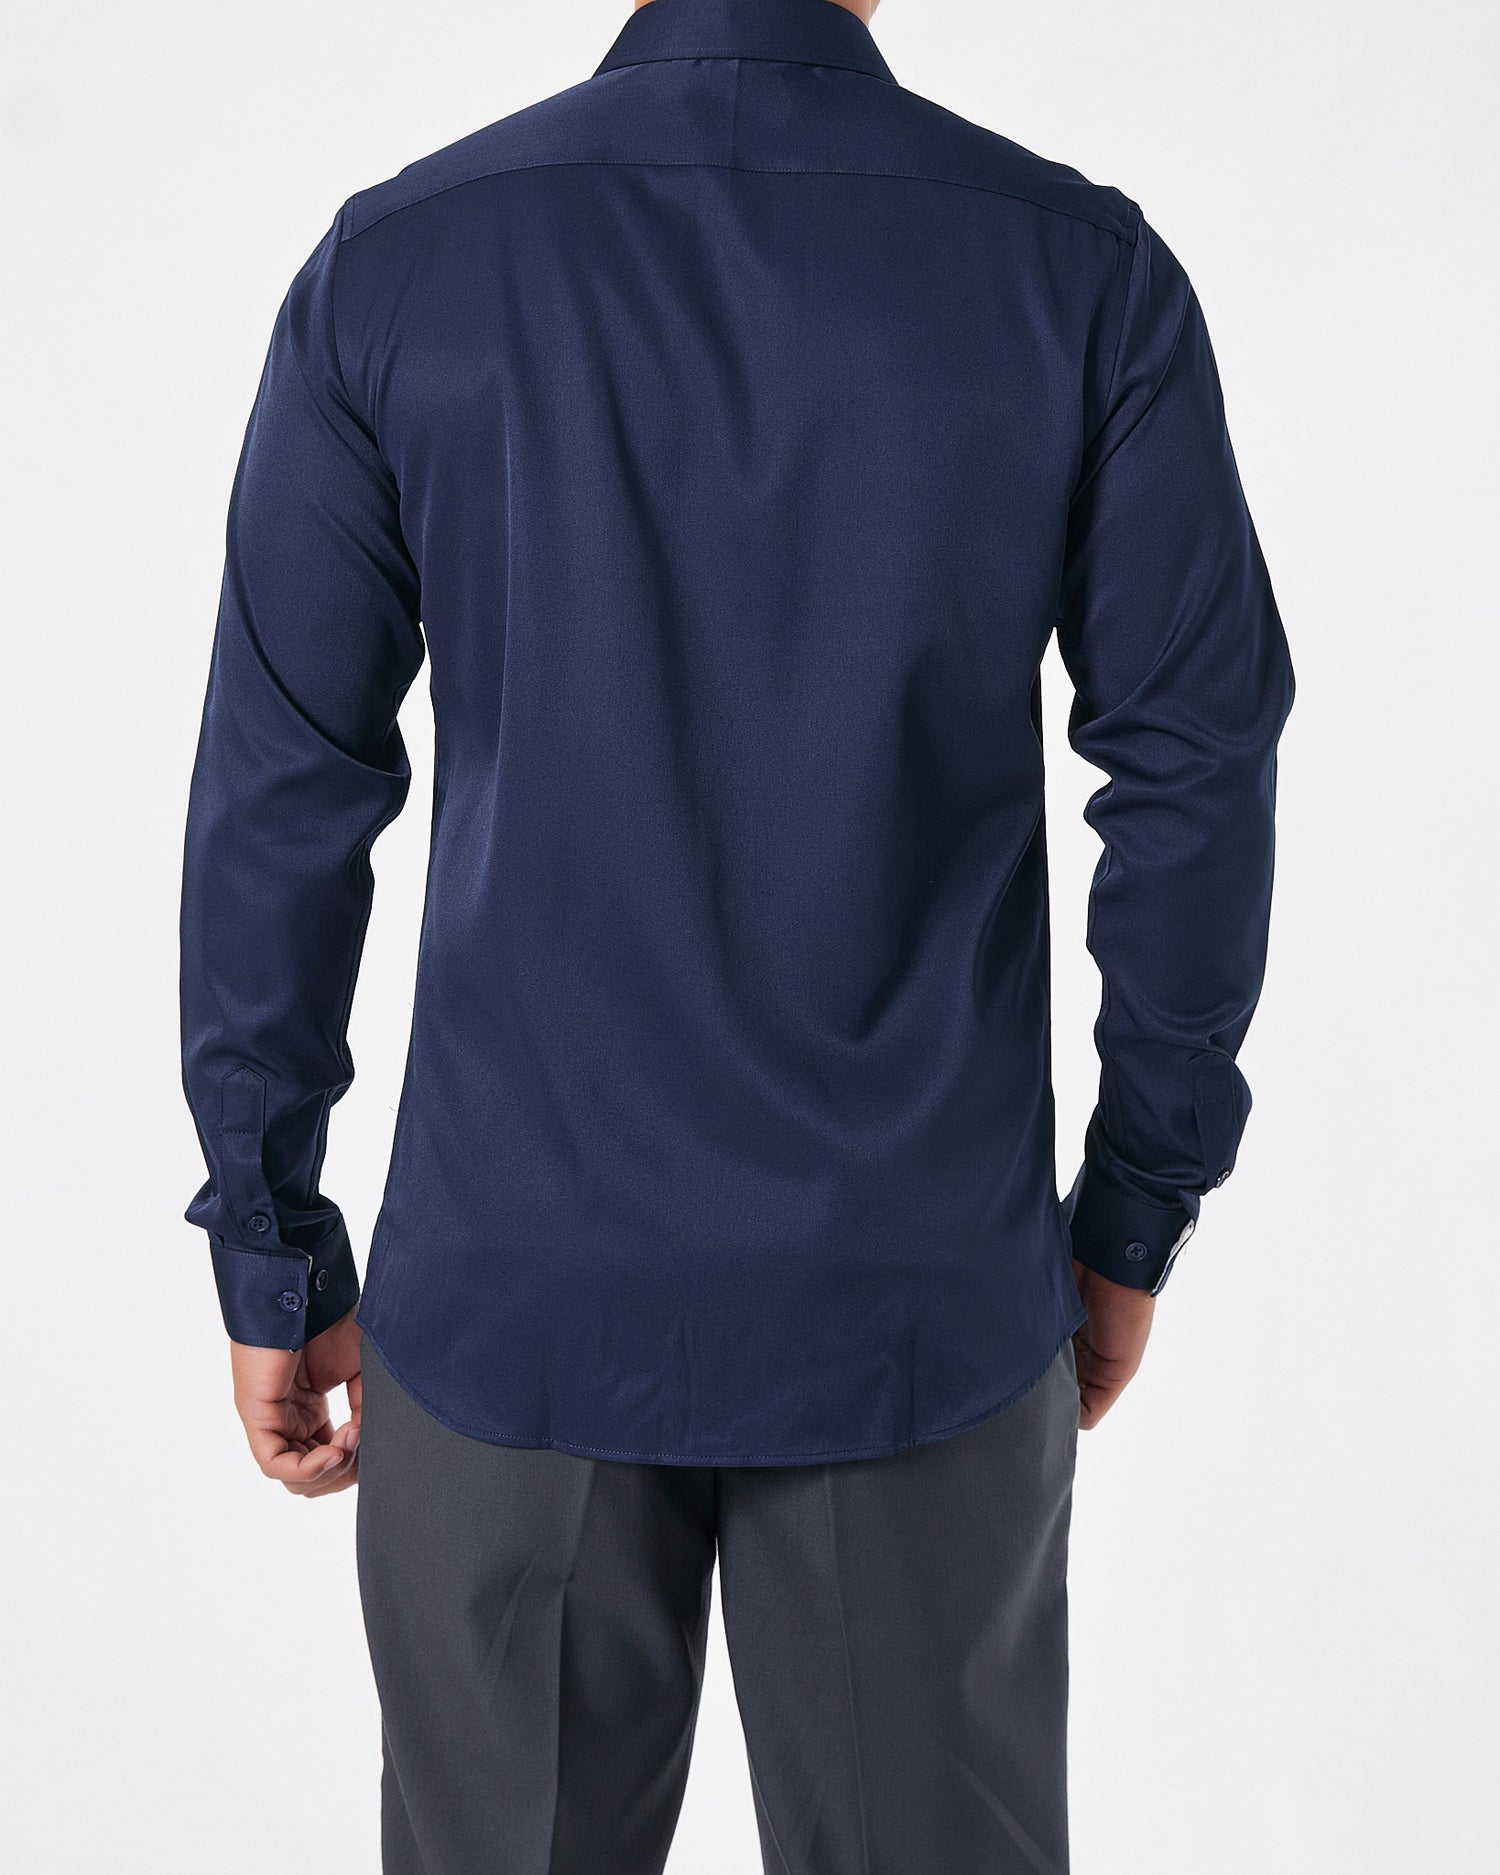 FEN Logo Embroidered Men Blue Shirts Long Sleeve 22.90